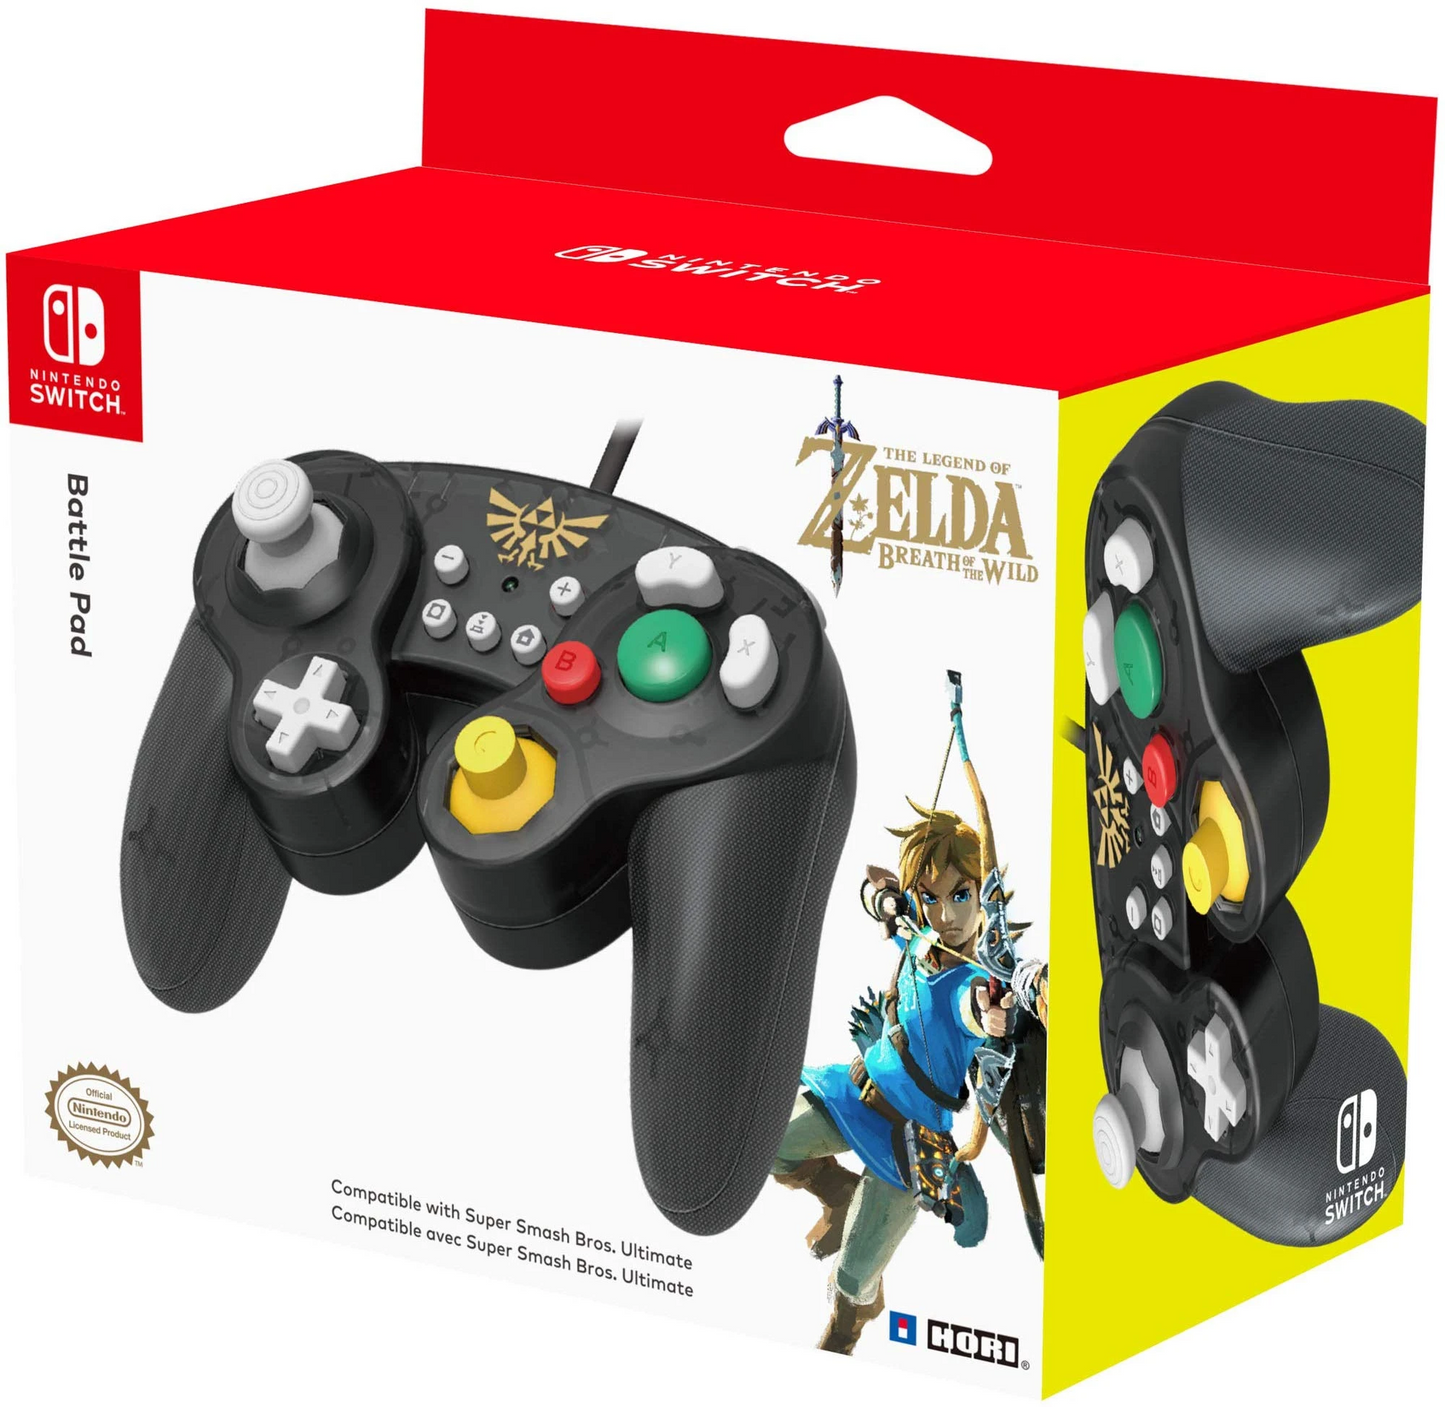 Battle Pad The Legend Of Zelda GameCube Style Controller - Nintendo Switch*